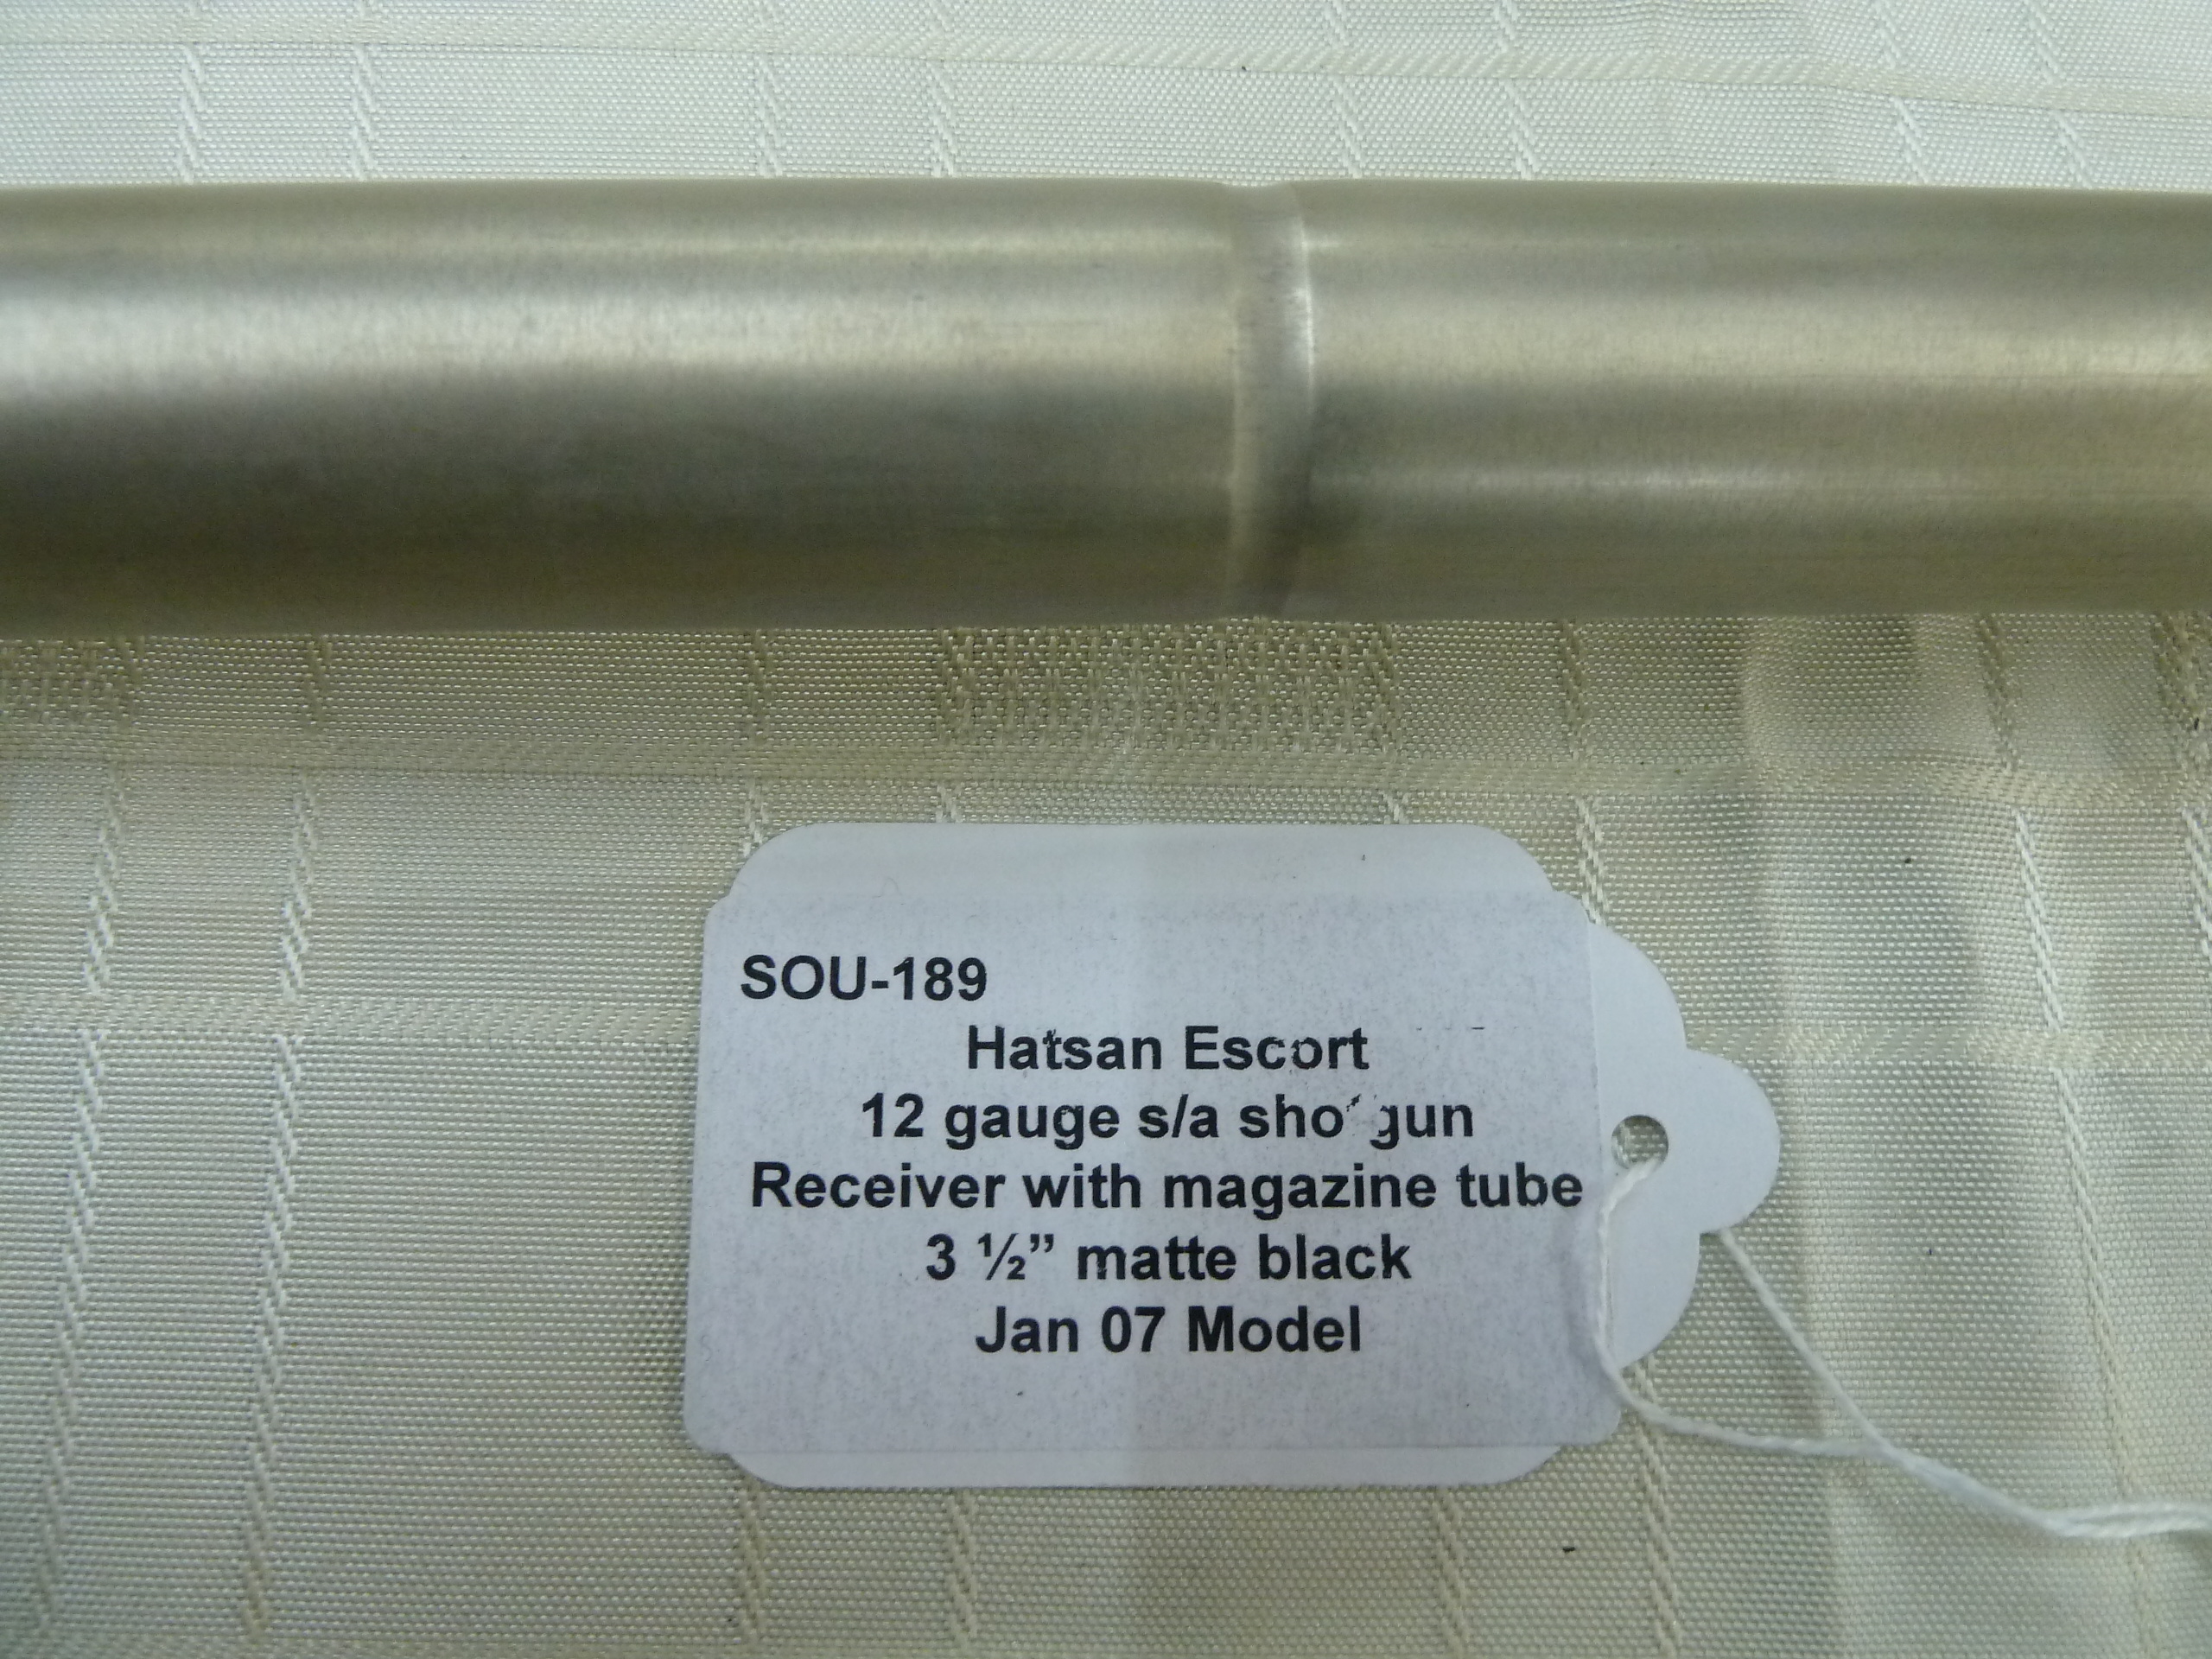 SOU-189 Hatsan Escort receiver with magazie tube Jan 07 model (5)